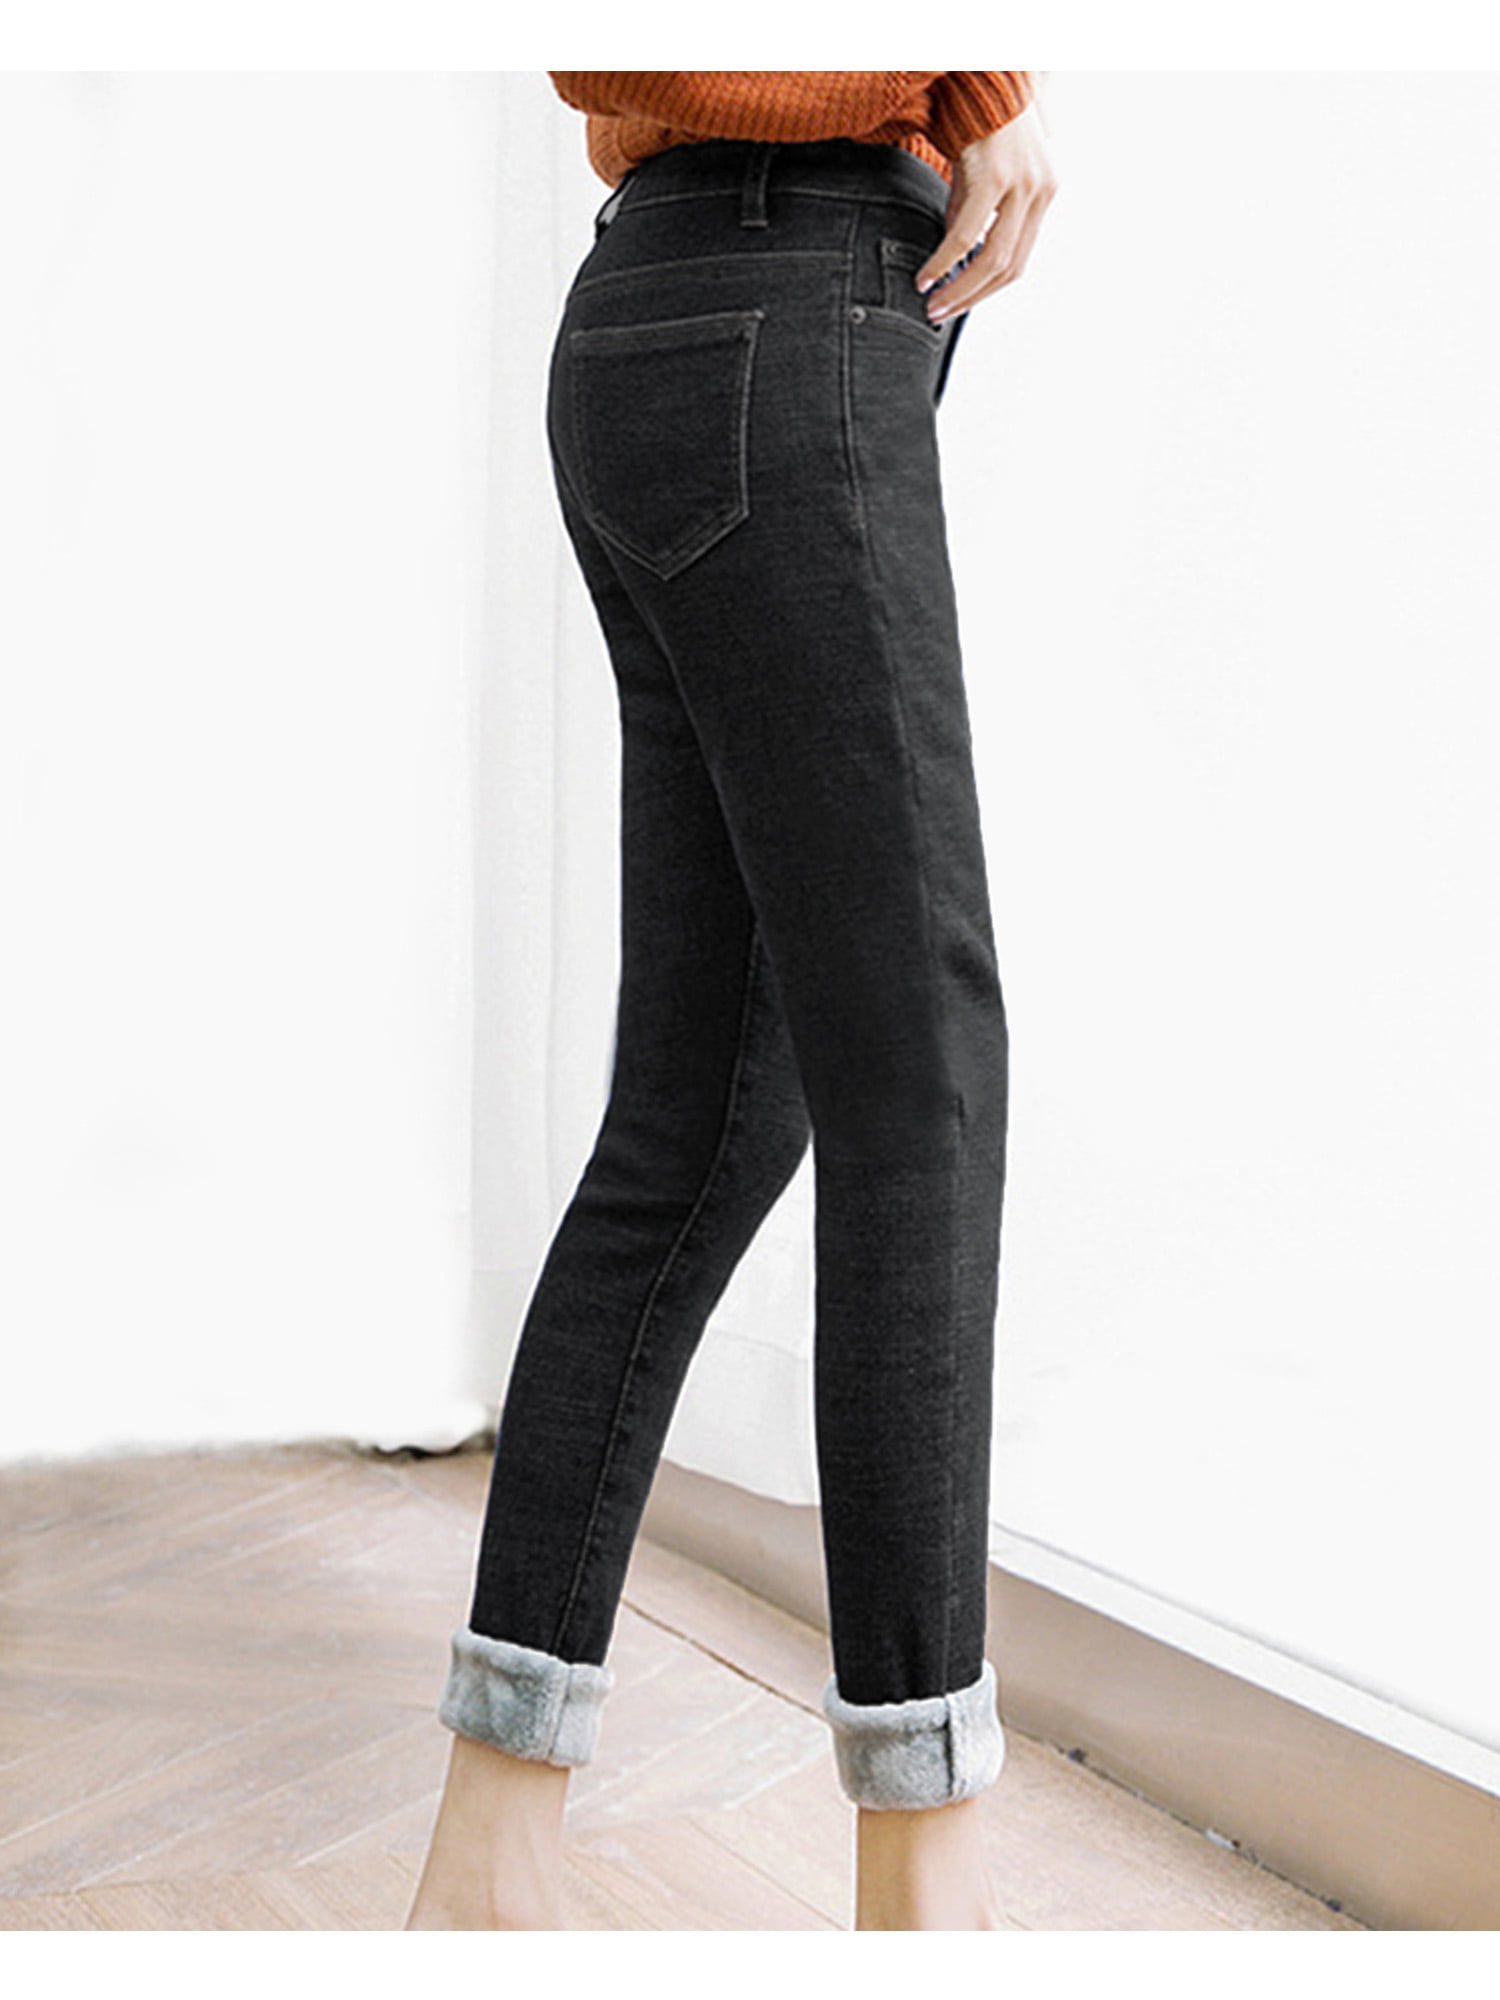 Jeans, Heipeiwa Womens Winter Skinny Jeans Fleece Lined Slim Stretch Warm  Jeggings